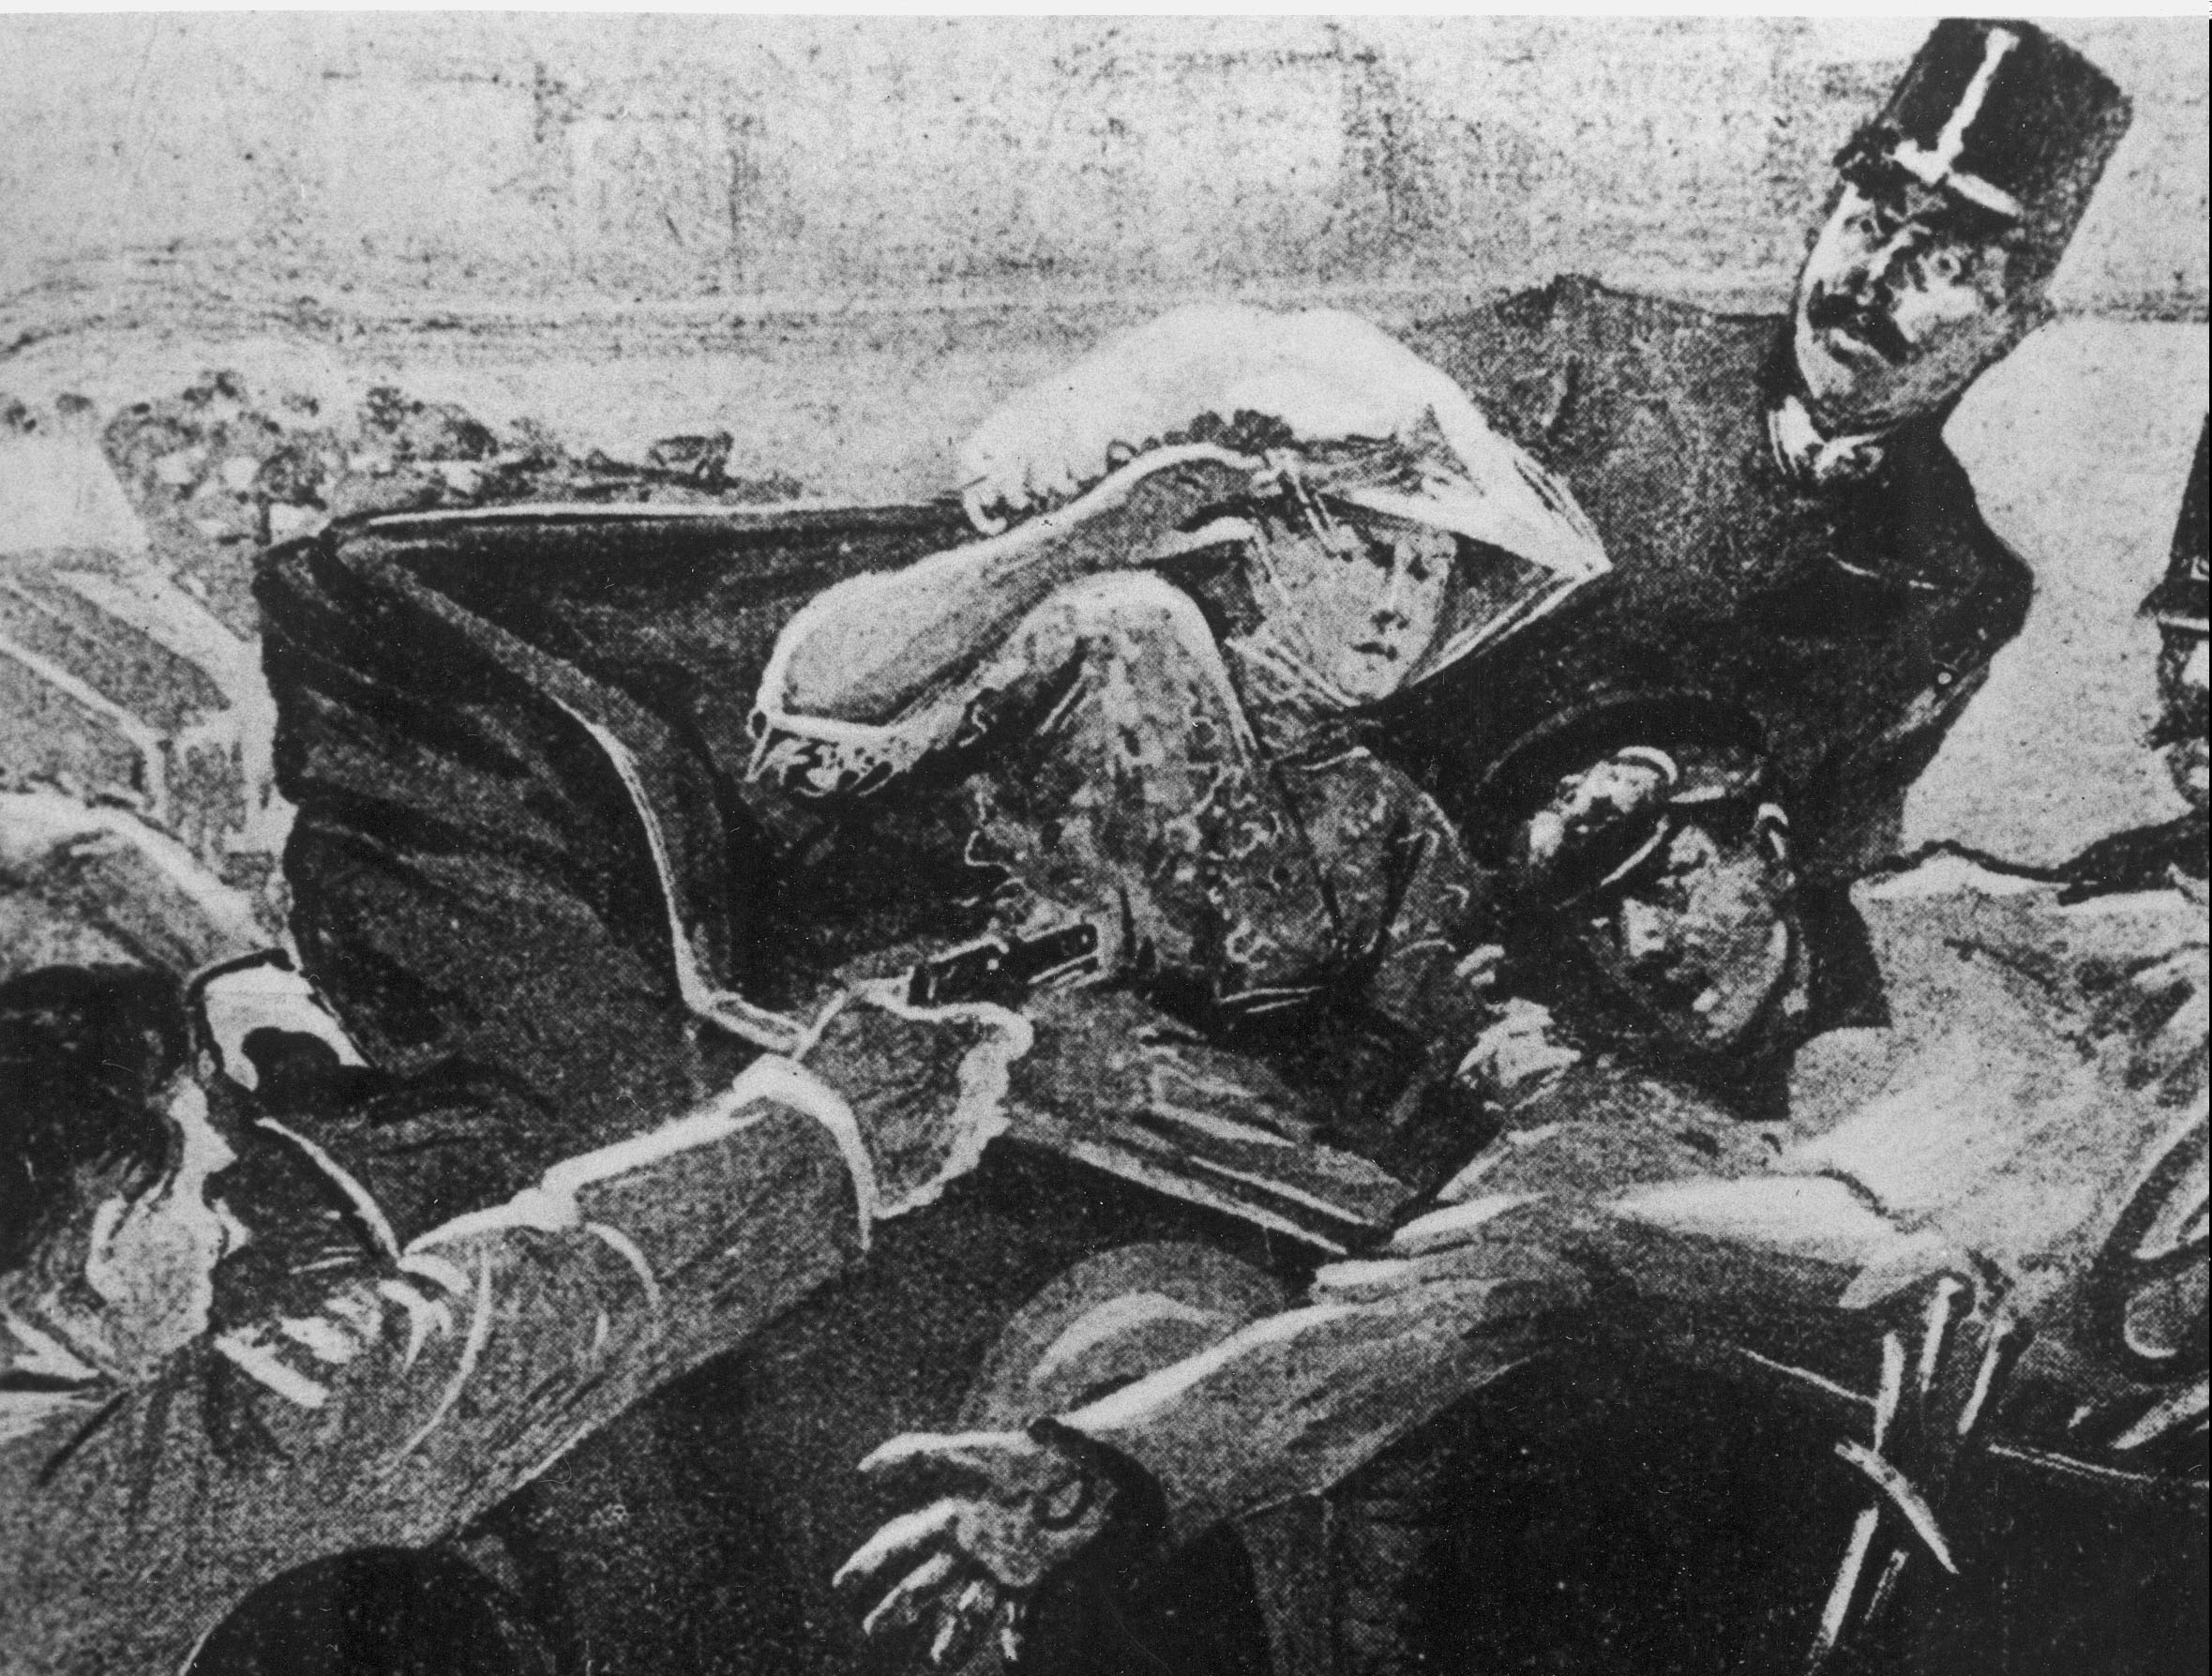 the assassination of archduke franz ferdinand